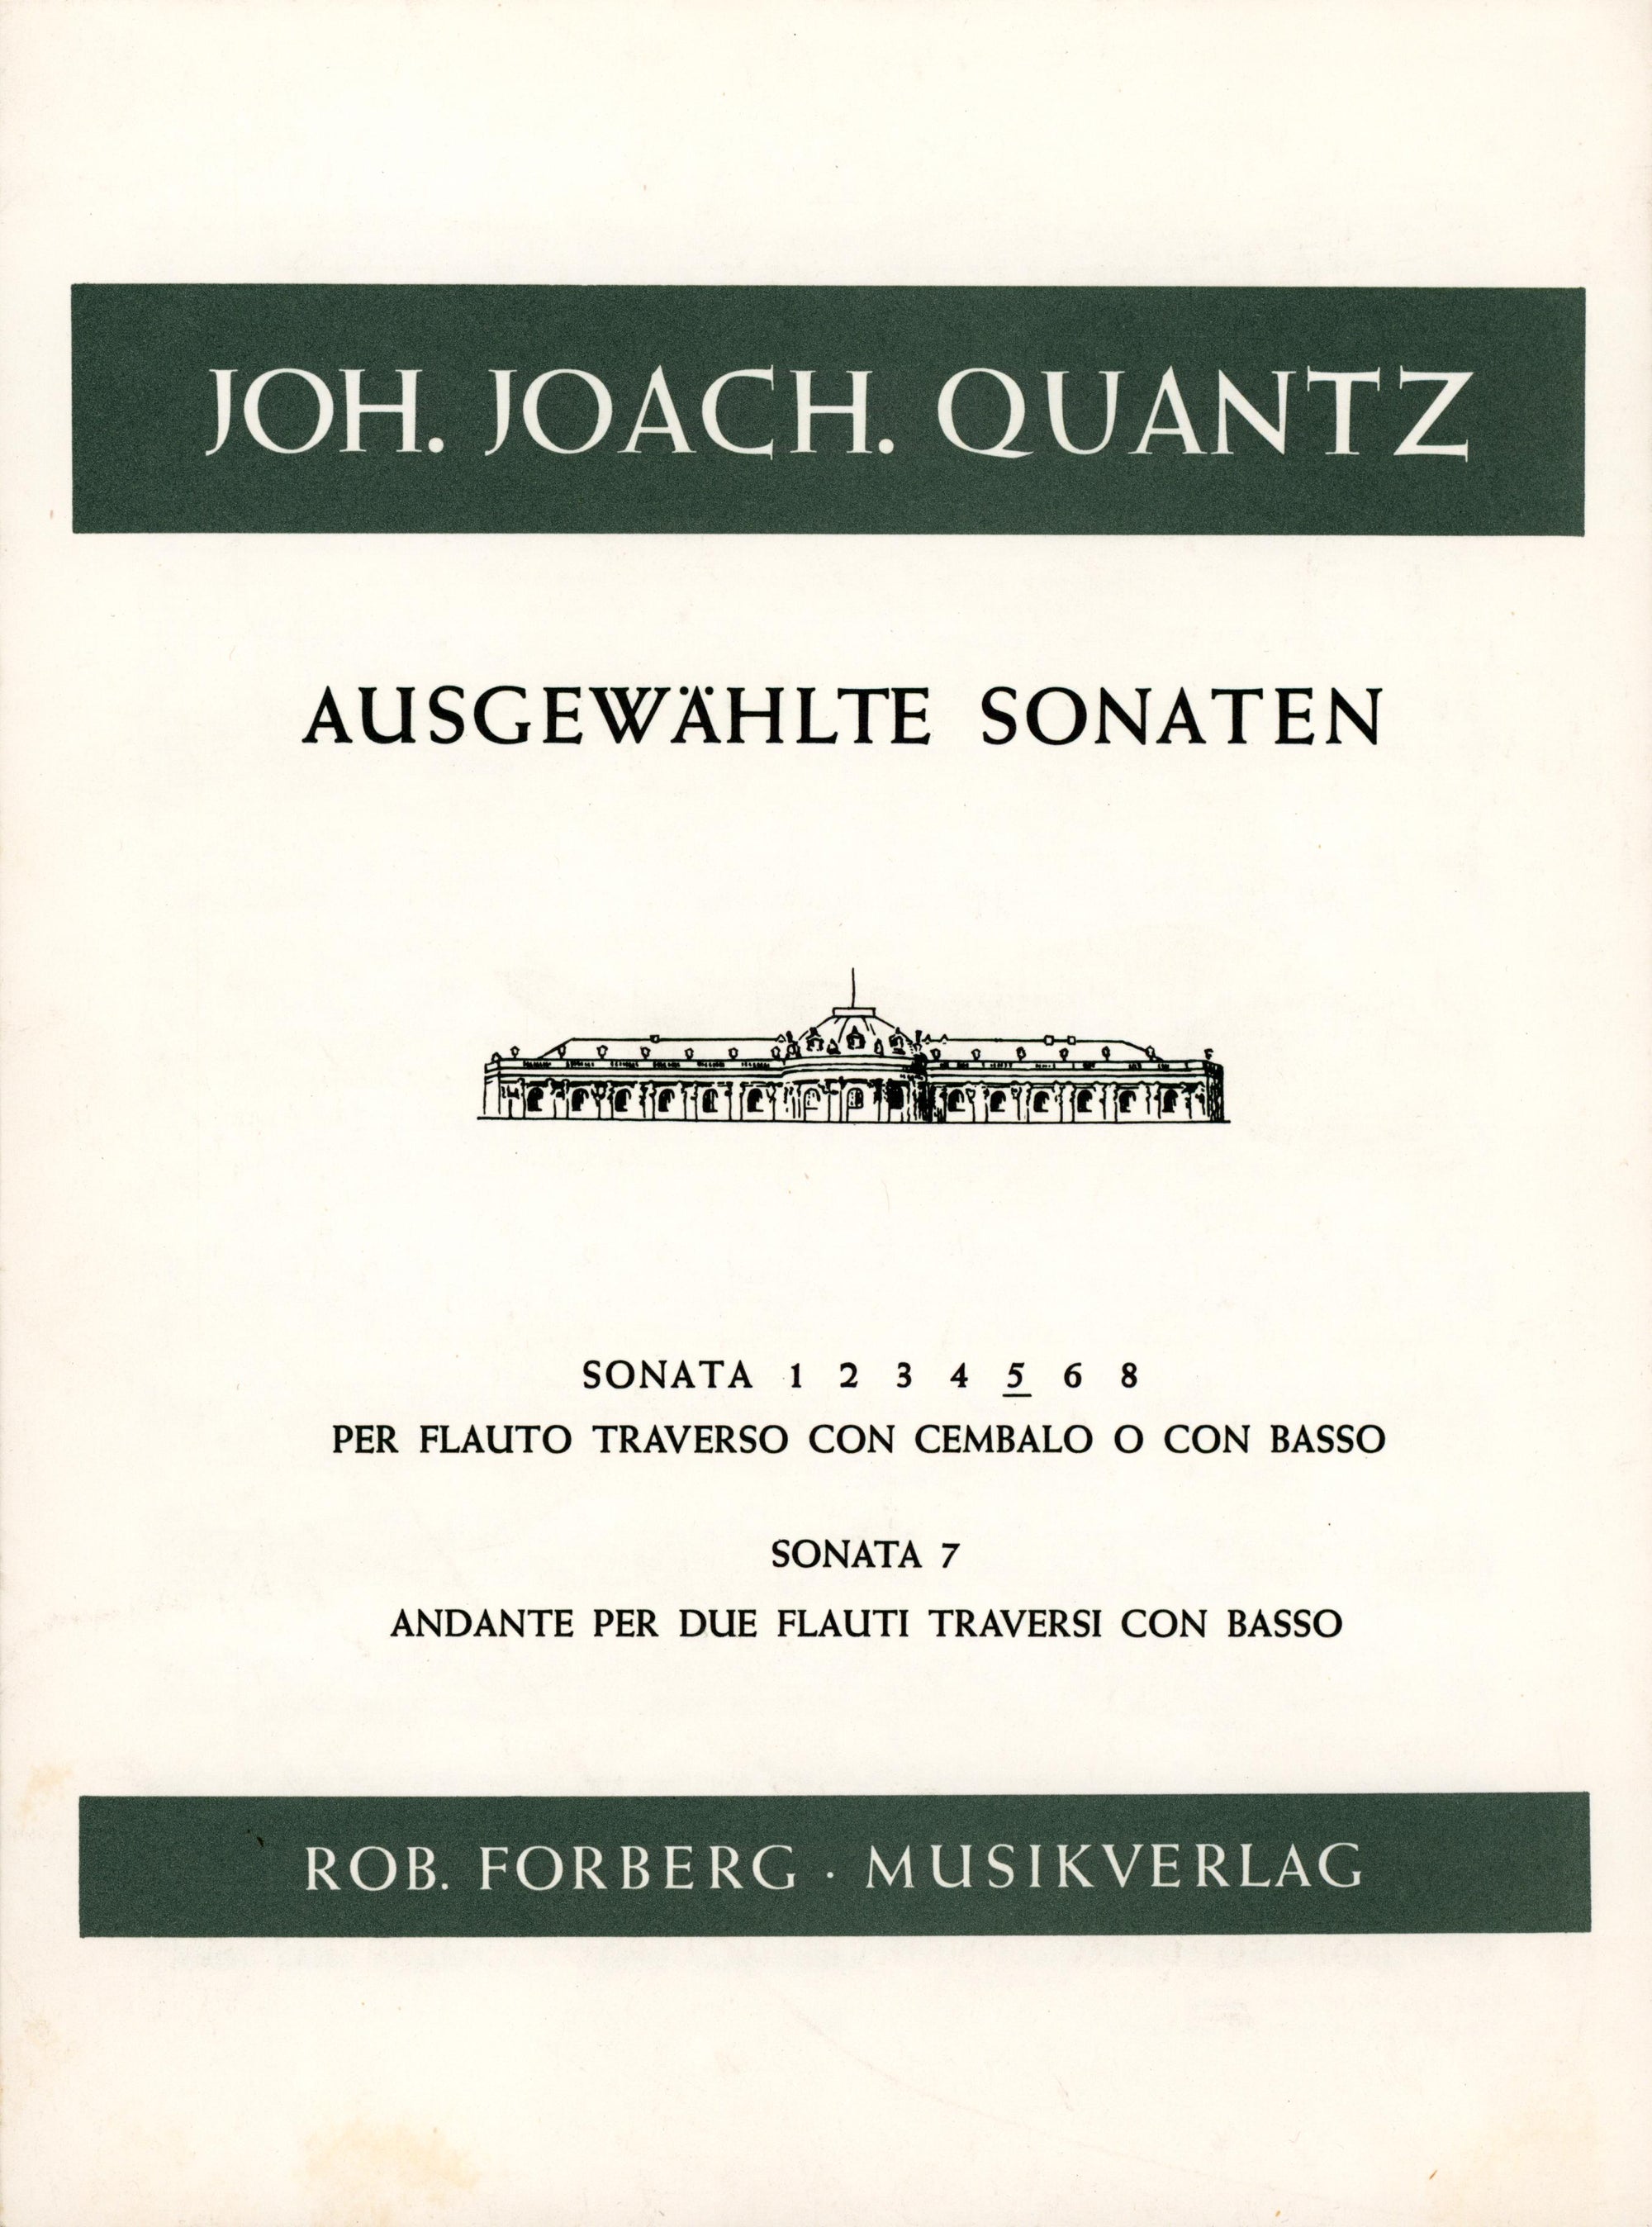 Quantz: Flute Sonata No. 5 in E Minor, QV 1:77, Op. 1, No. 5